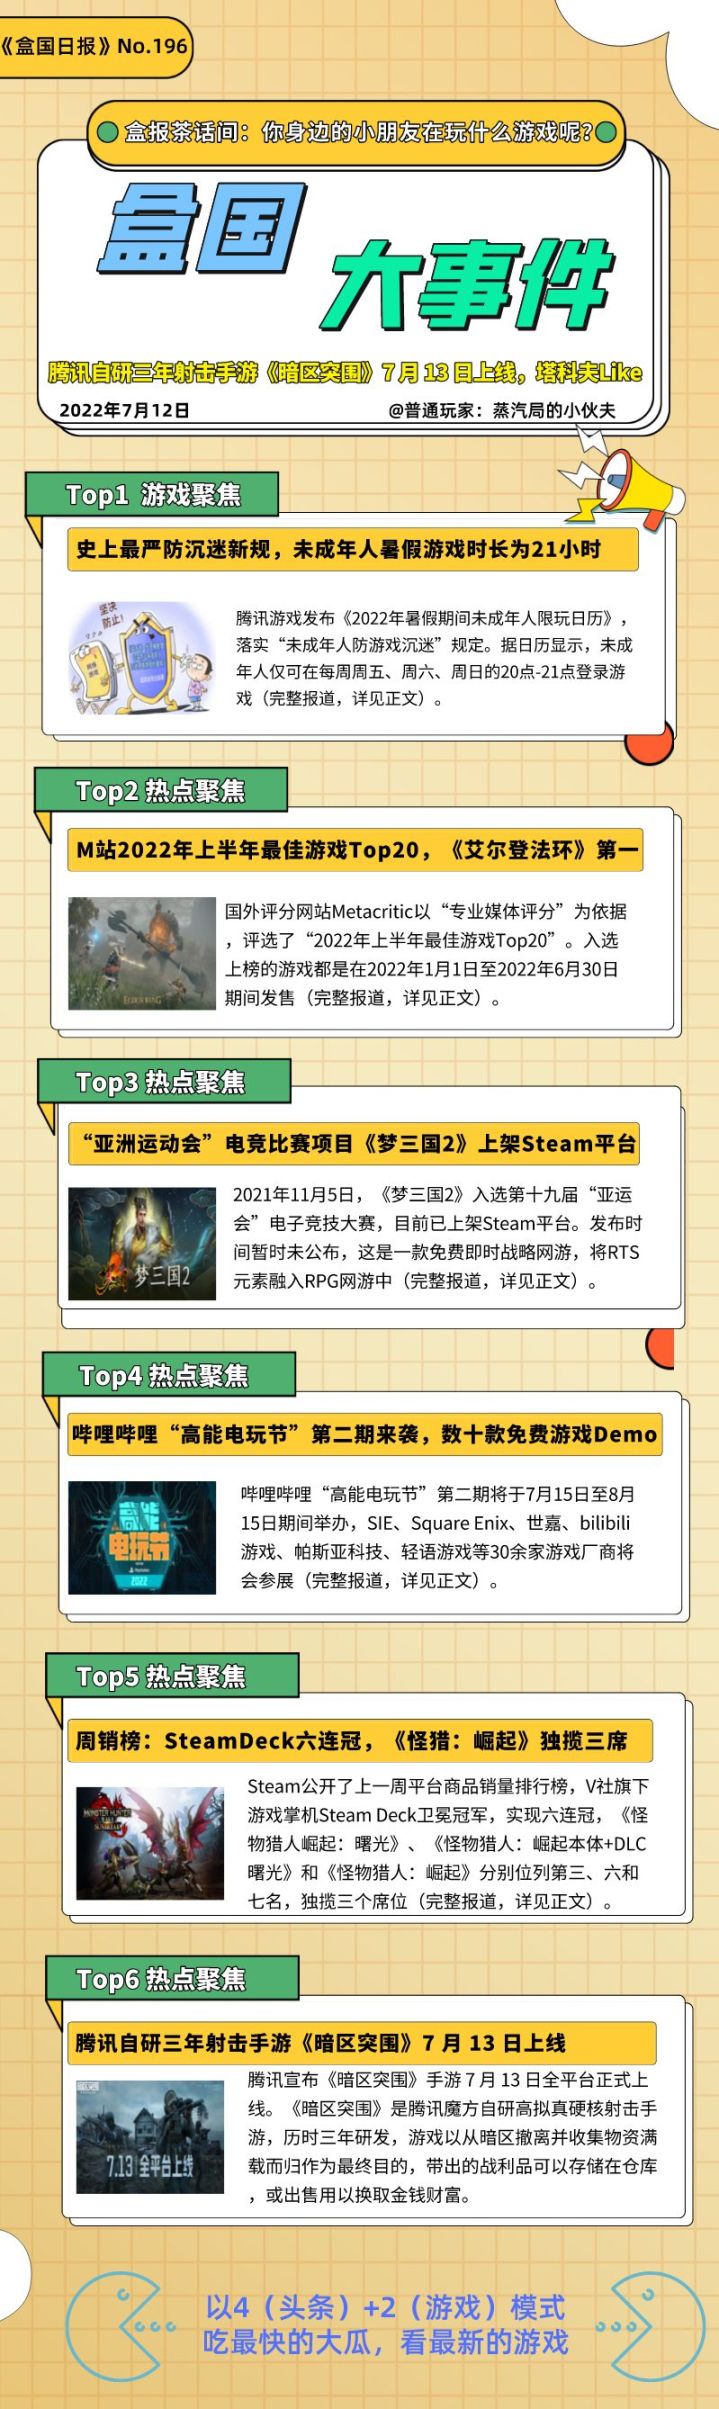 【PC遊戲】盒國日報|未成年人暑假遊戲時長為21小時；2022年上半年最佳遊戲Top20-M站-第0張